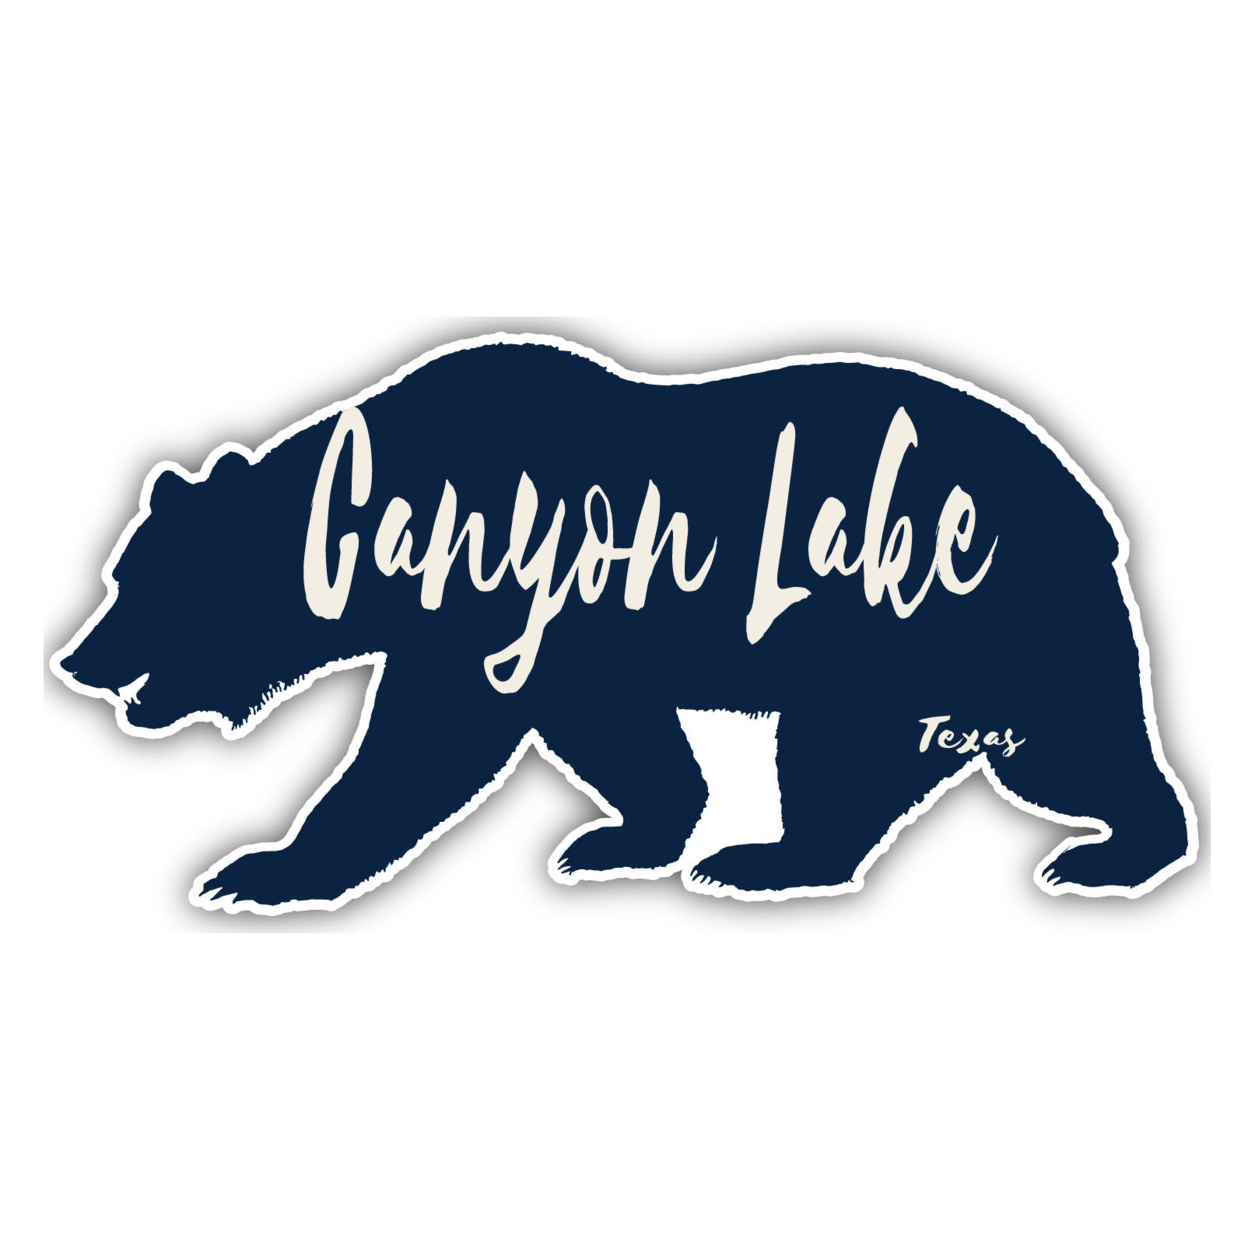 Canyon Lake Texas Souvenir Decorative Stickers (Choose Theme And Size) - 4-Pack, 10-Inch, Bear